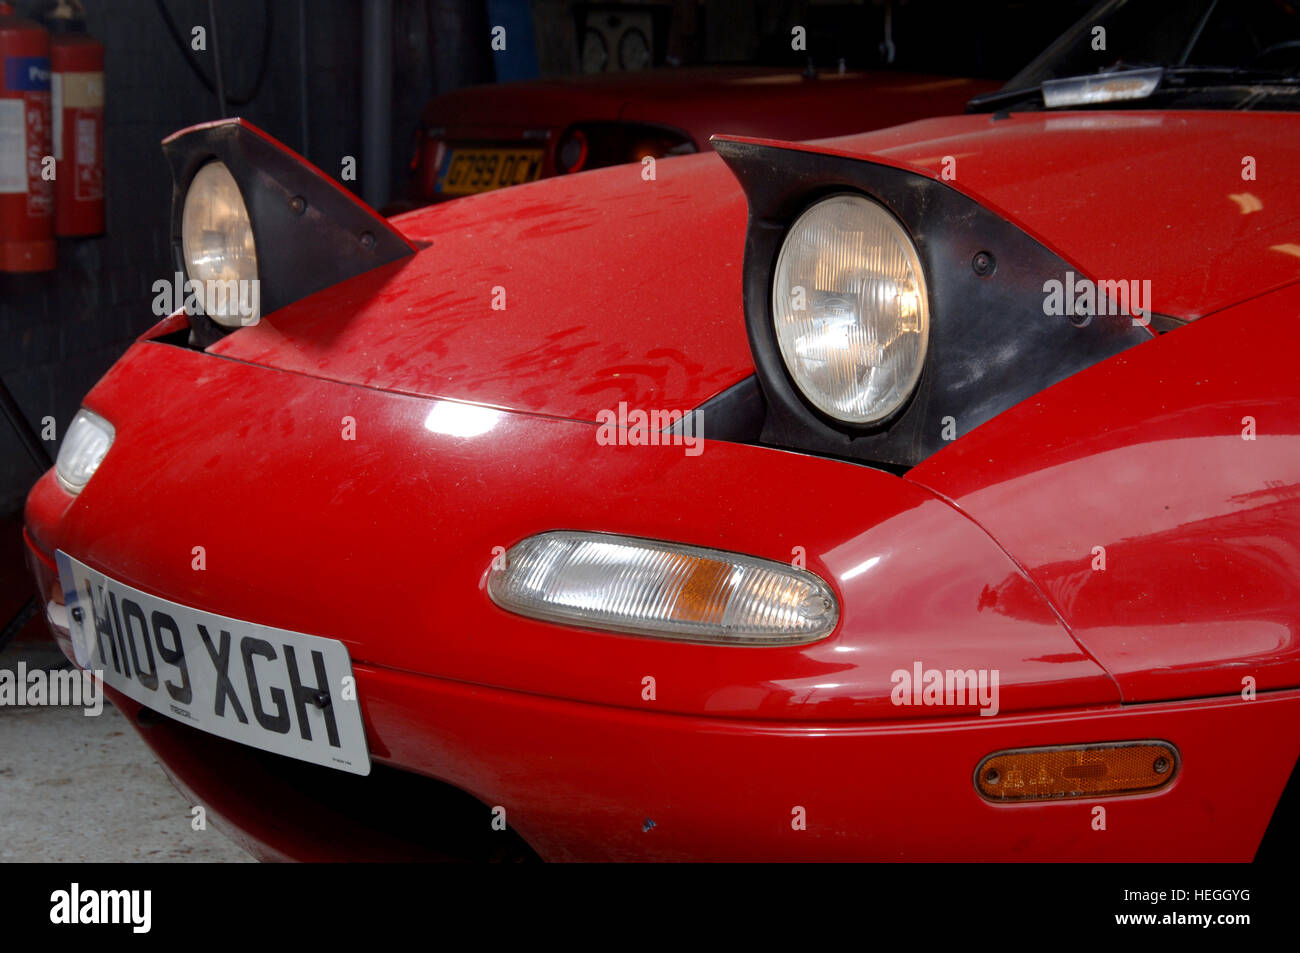 Pop up headlights a red Mazda MX5 sports car Stock Photo - Alamy